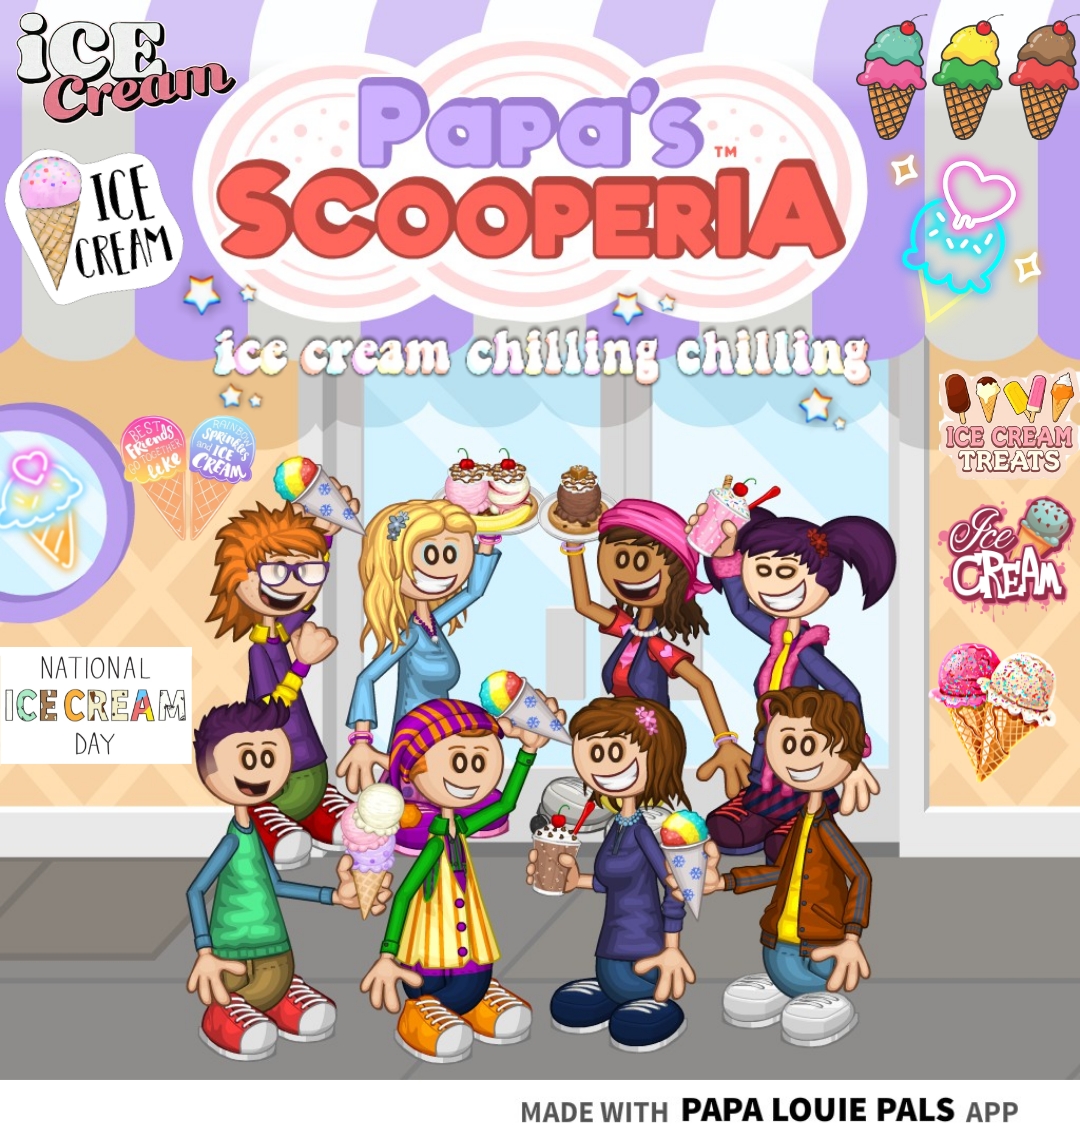 Papa's Cluckeria Secrets (Perfect Build, Perfect Slushy) #papasgames #, papas scooperia